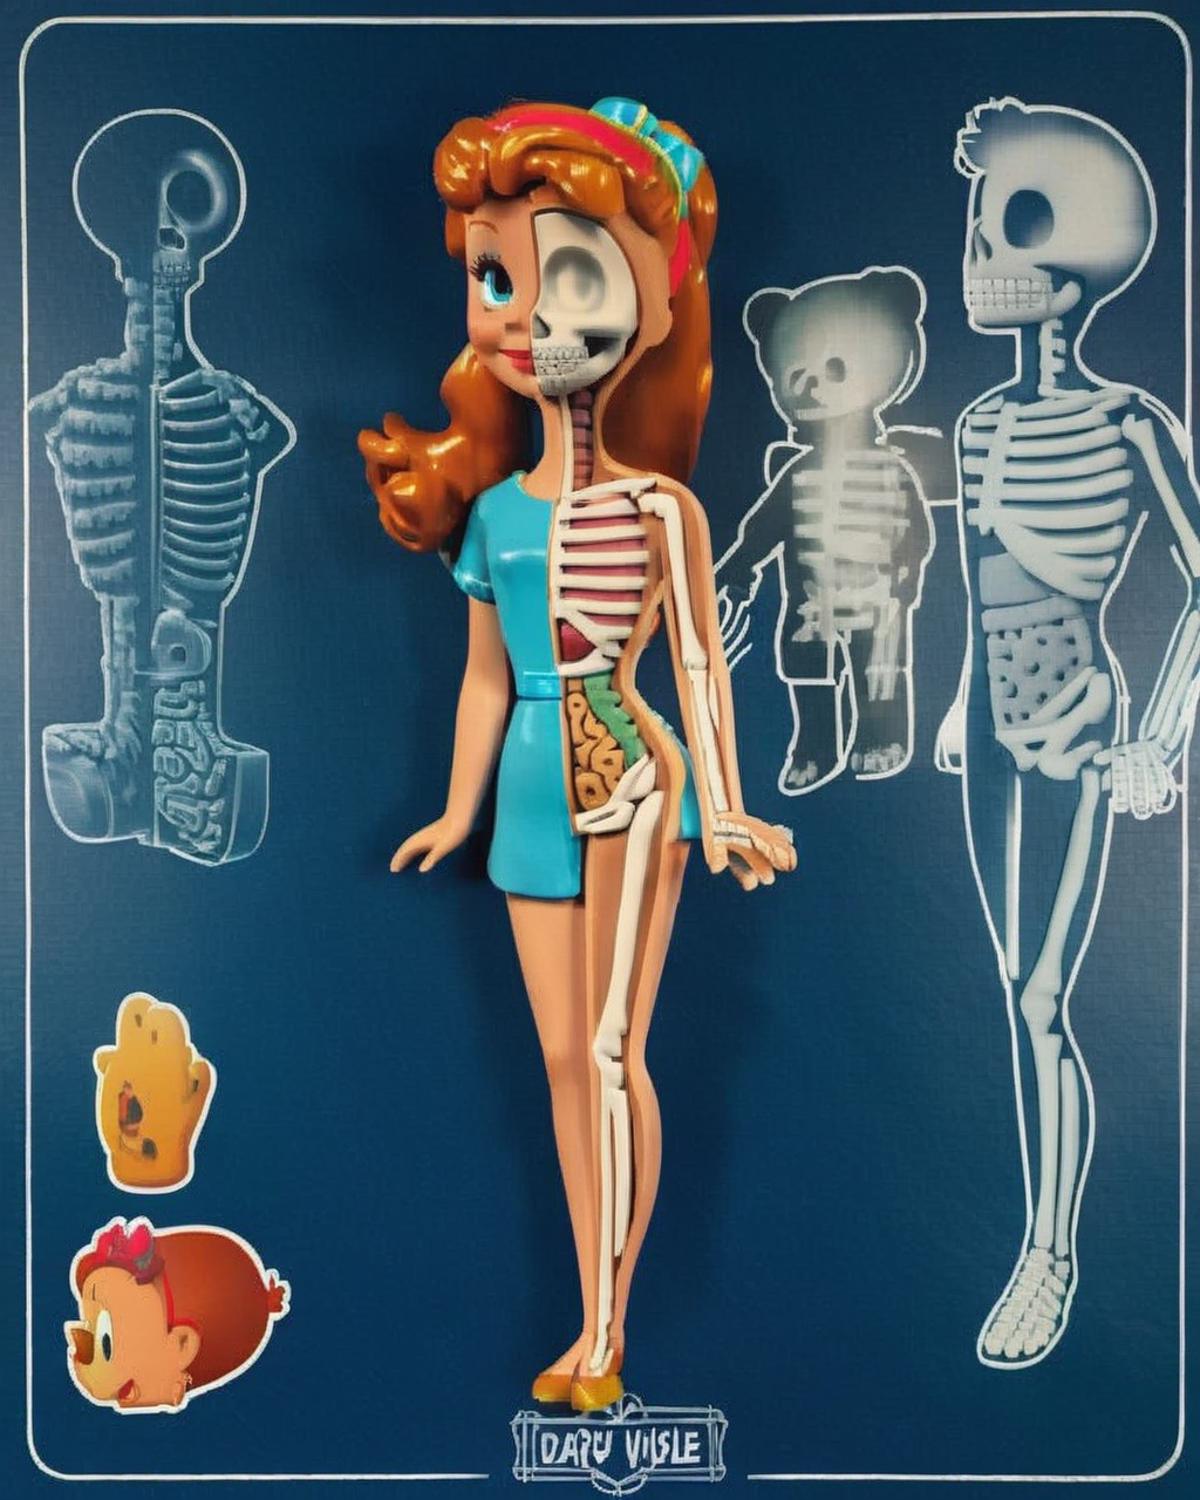 Skeleton Toy image by Ciro_Negrogni